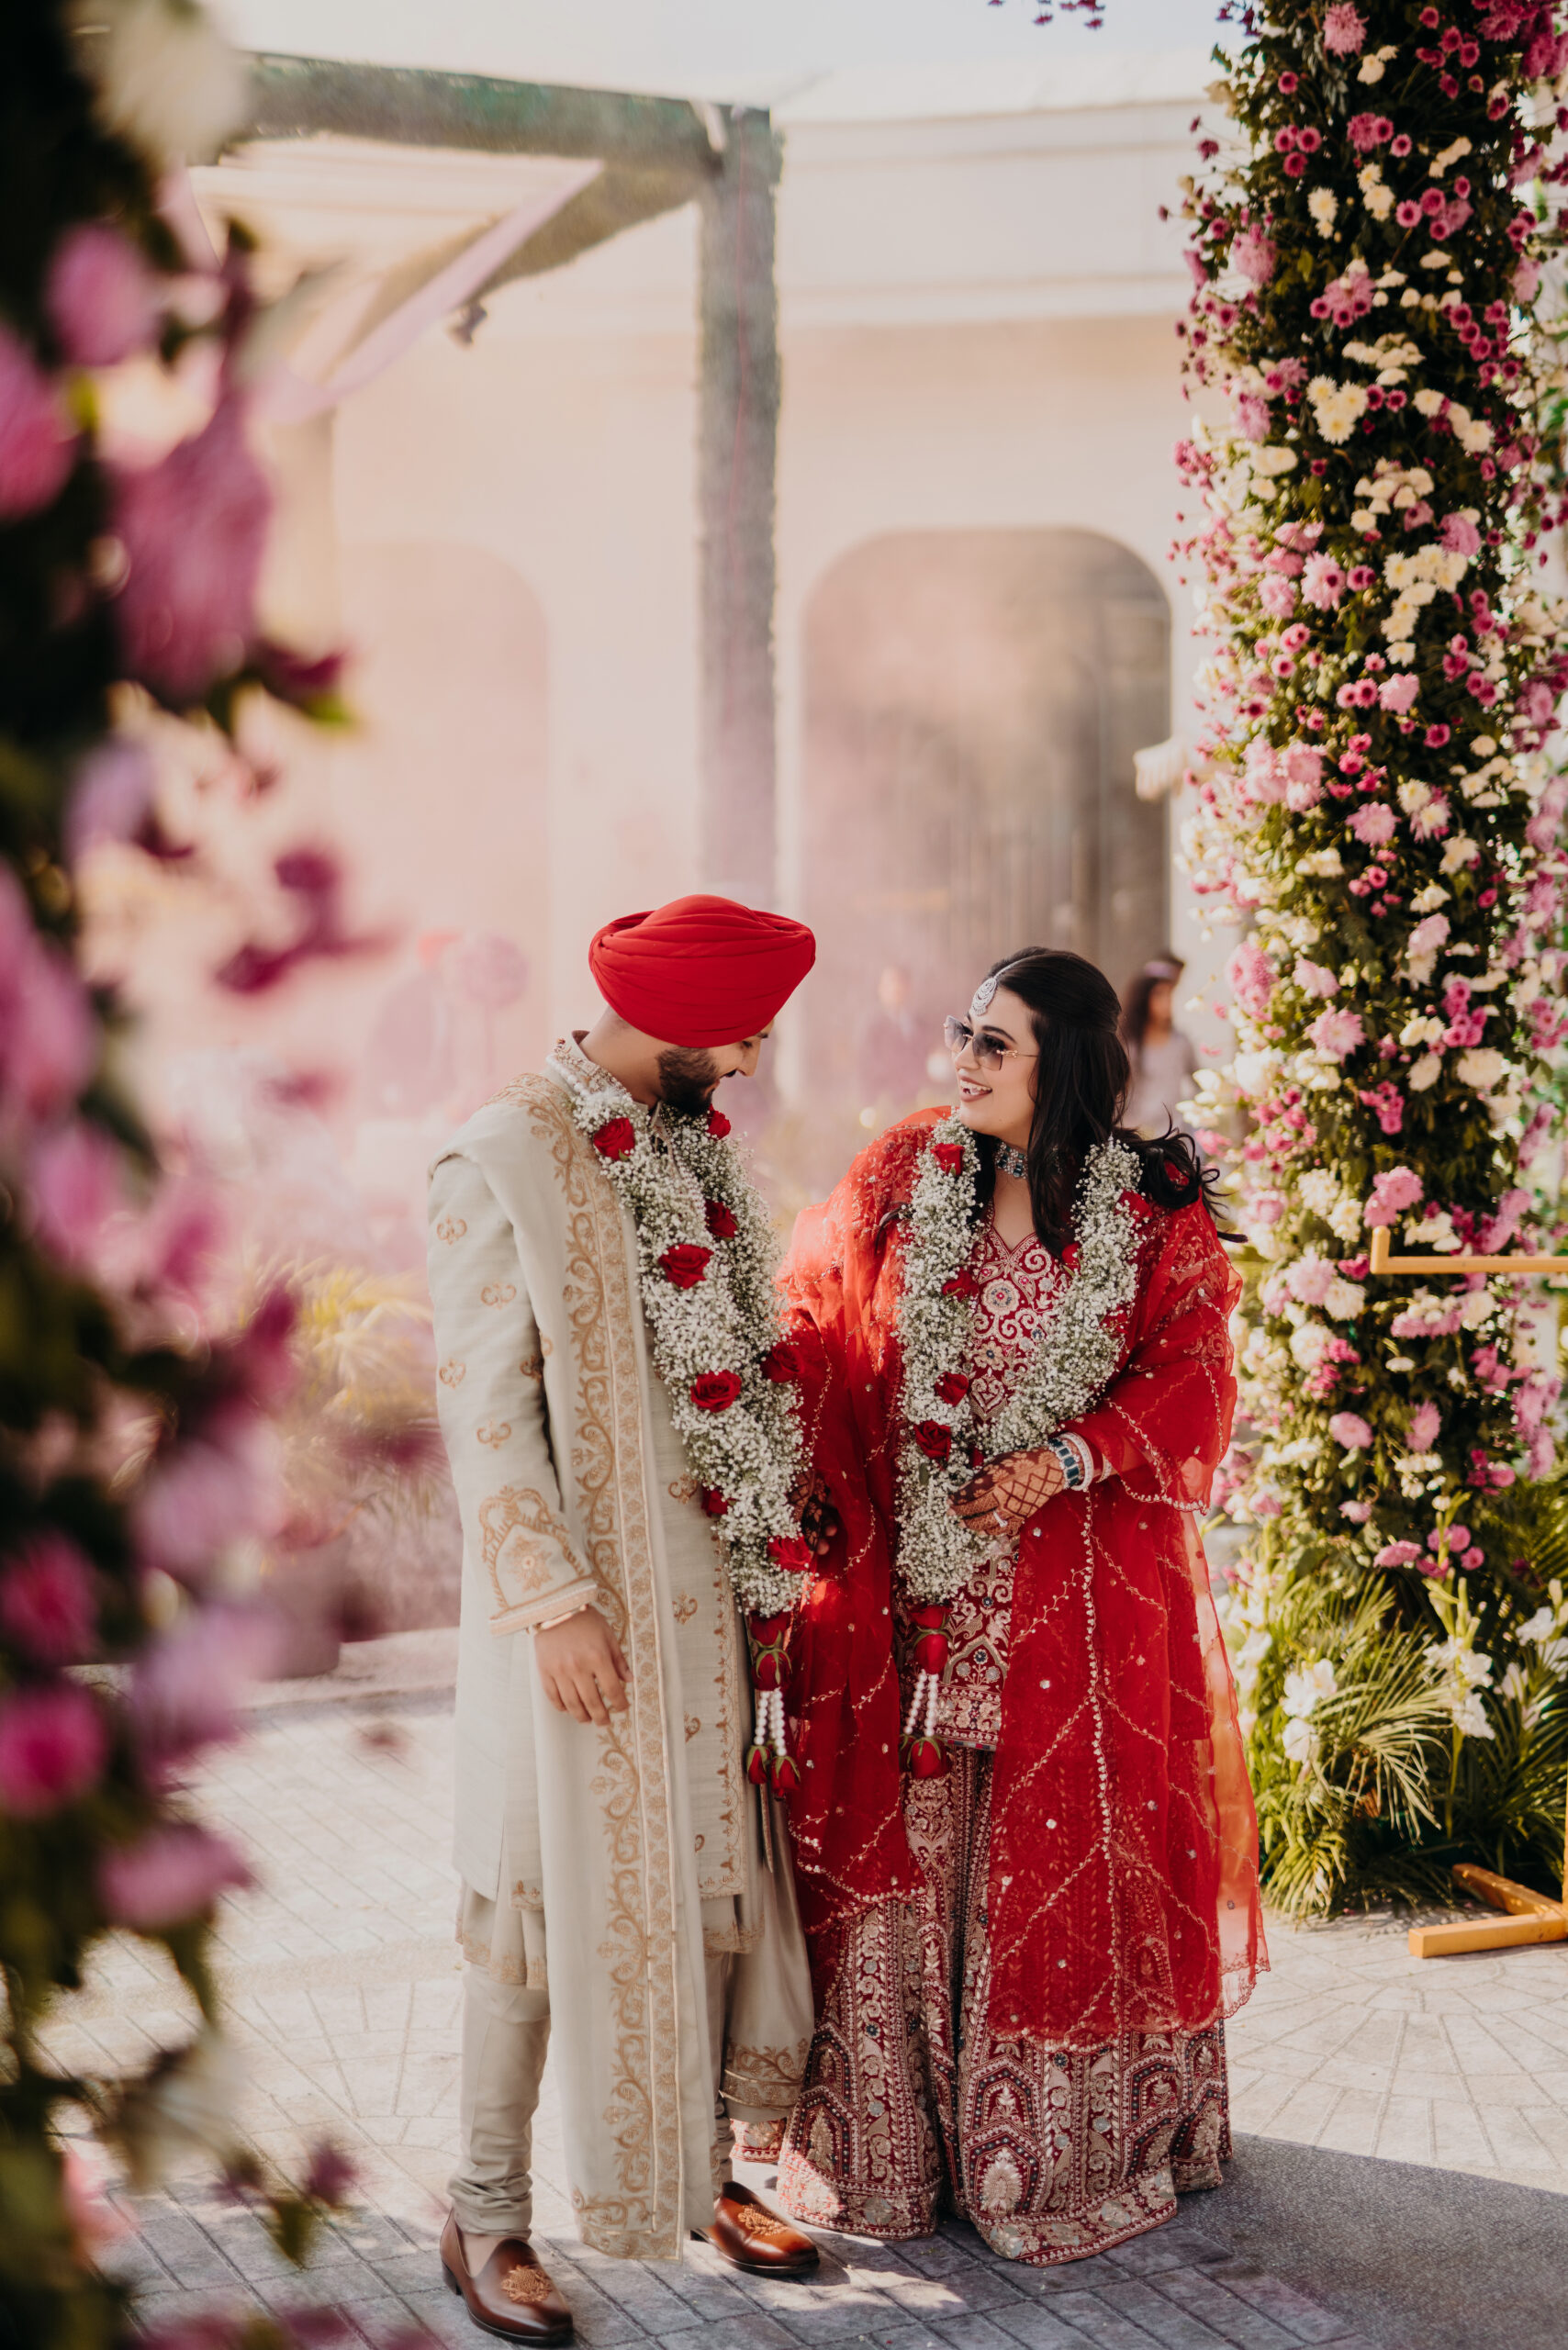 Sabyasachi | Indian wedding poses, Indian wedding photography, Indian bride  photography poses